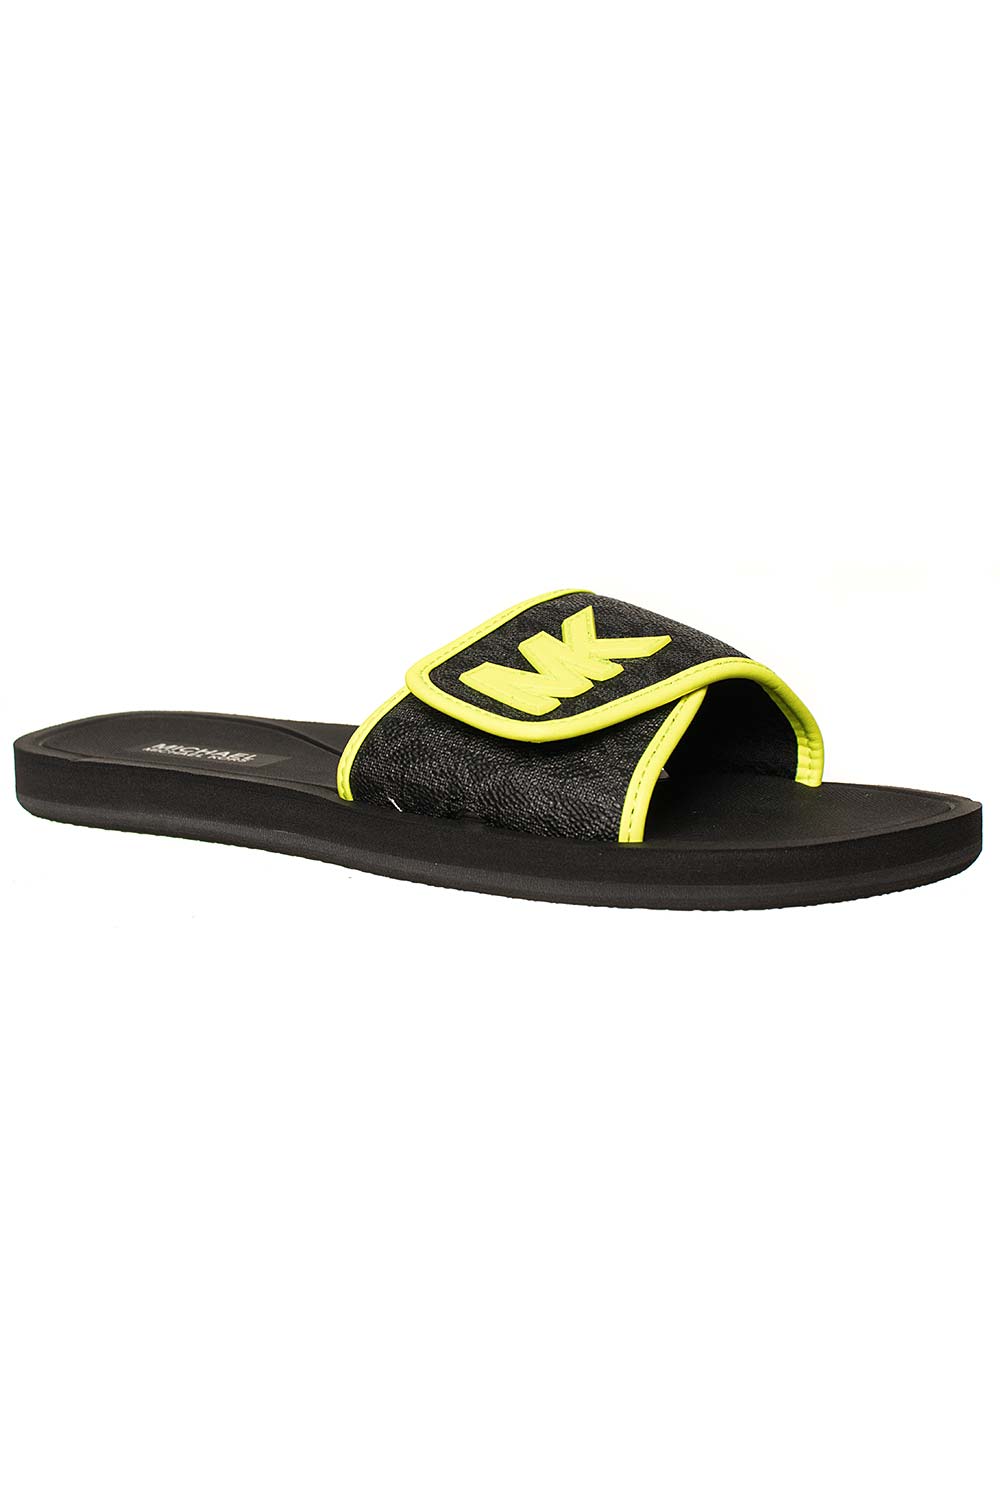 Michael Kors dámské pantofle neon žluto-černé Velikost: EU 38,5